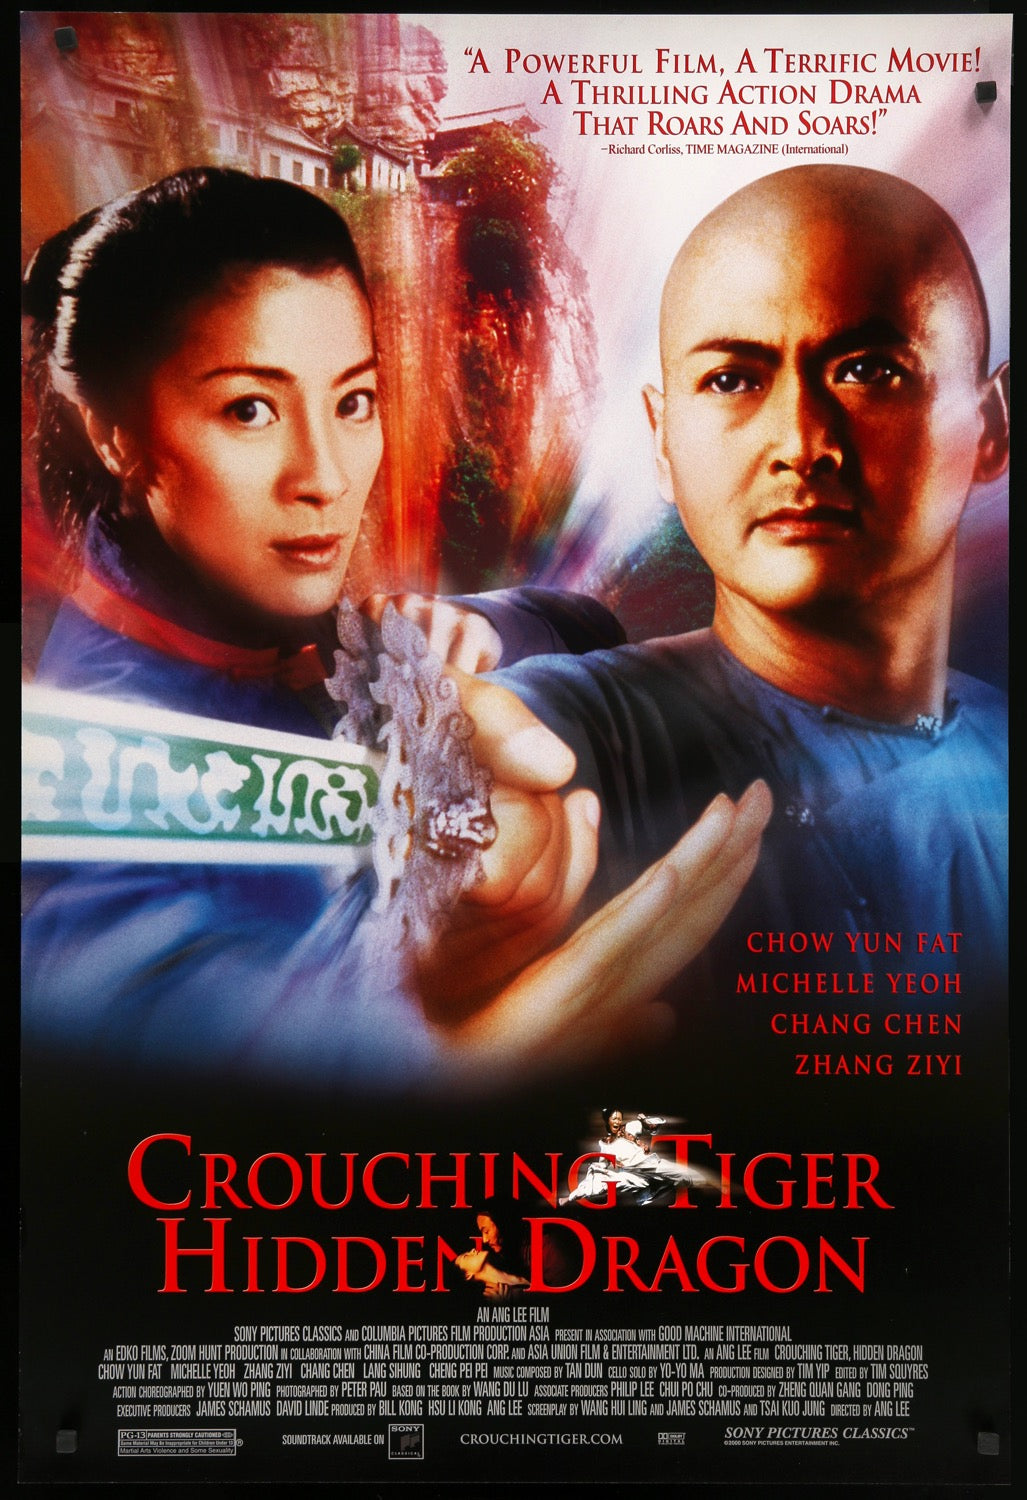 Crouching Tiger, Hidden Dragon (2000) original movie poster for sale at Original Film Art